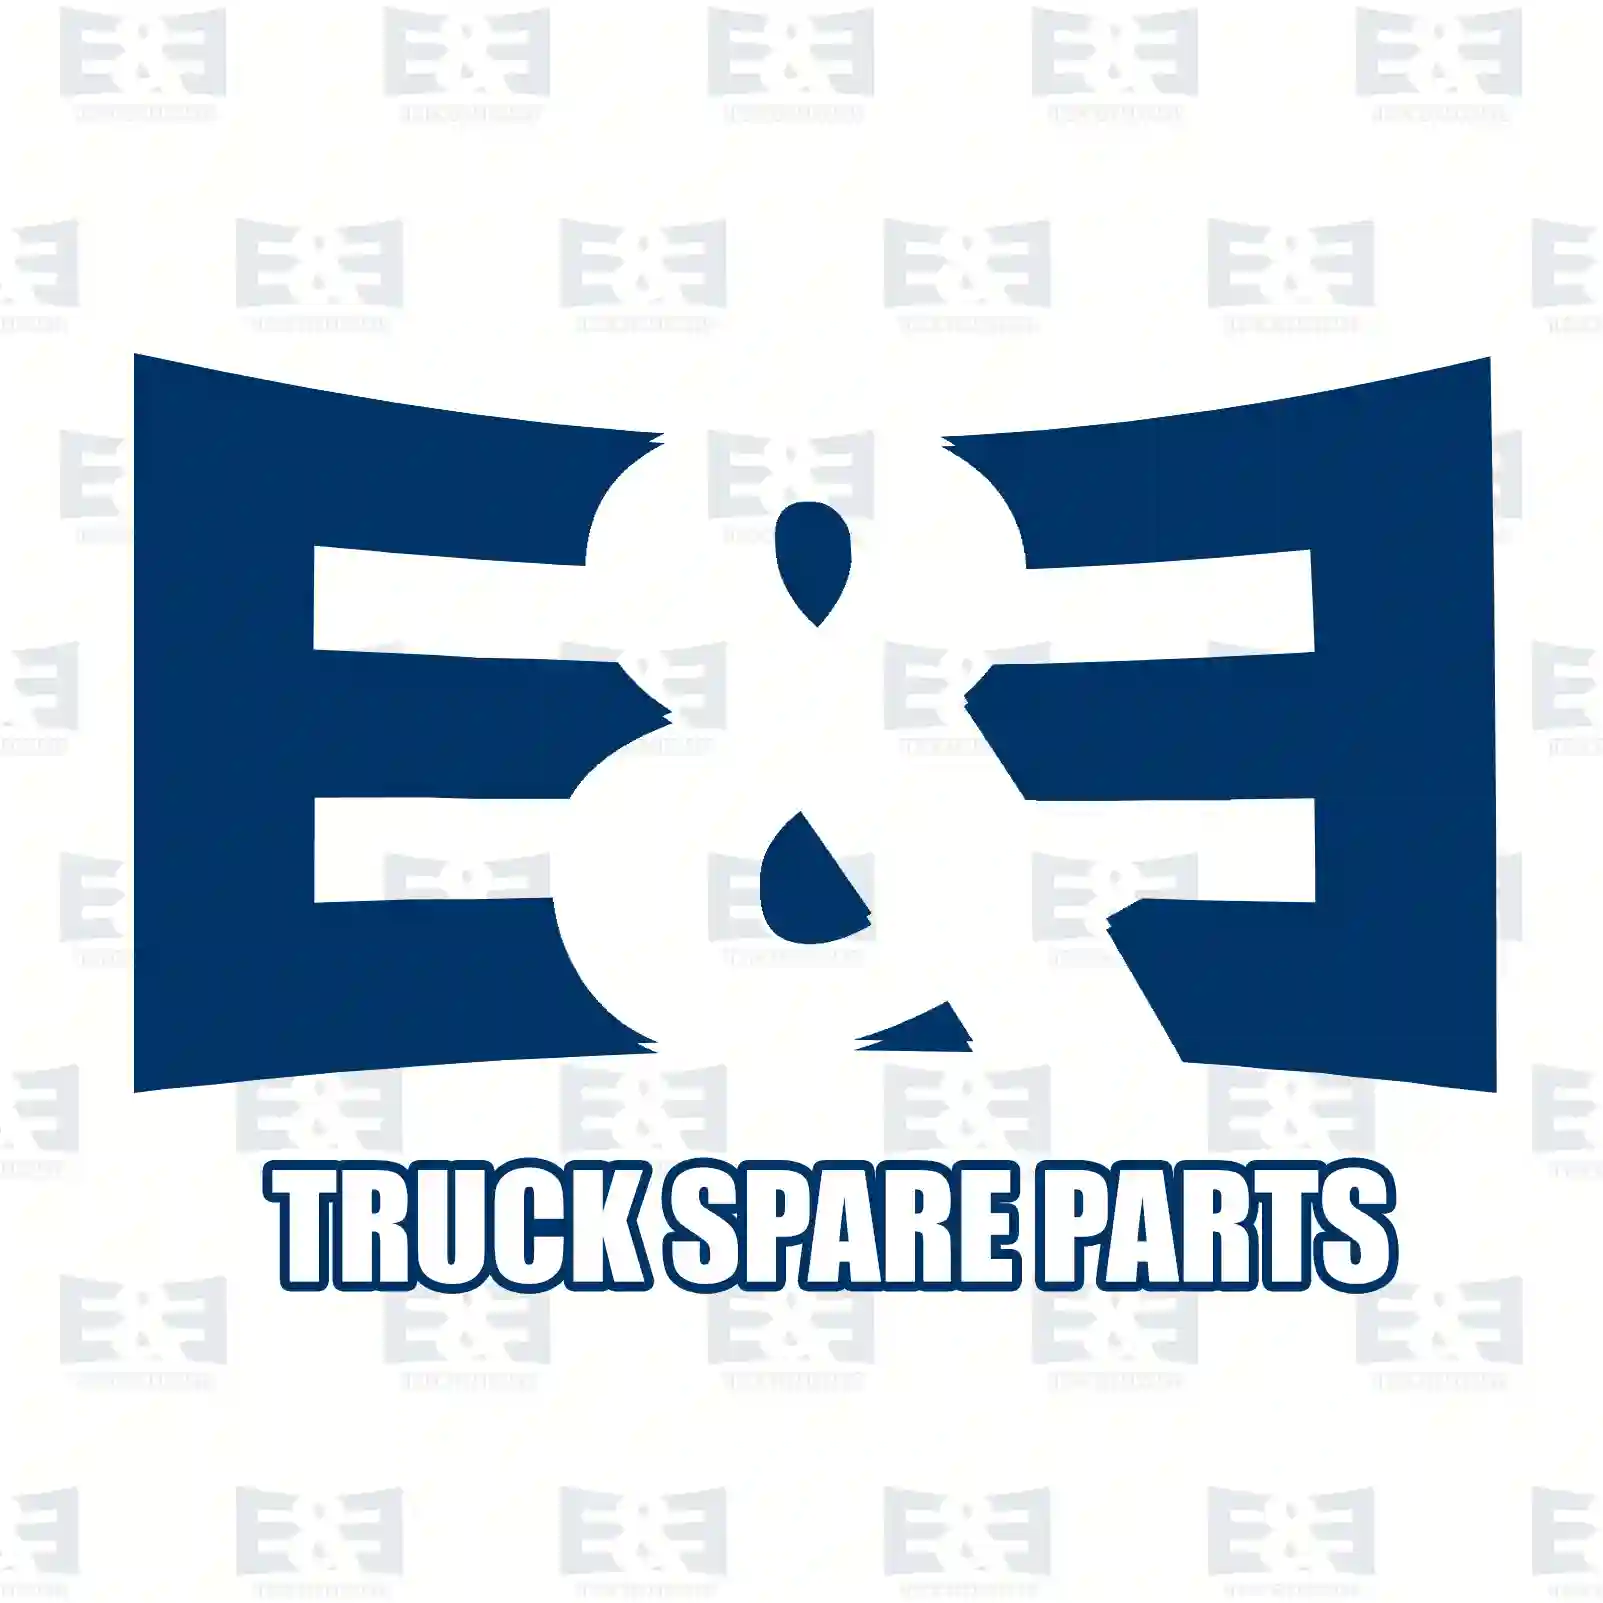  Fog lamp, left, without bulb || E&E Truck Spare Parts | Truck Spare Parts, Auotomotive Spare Parts